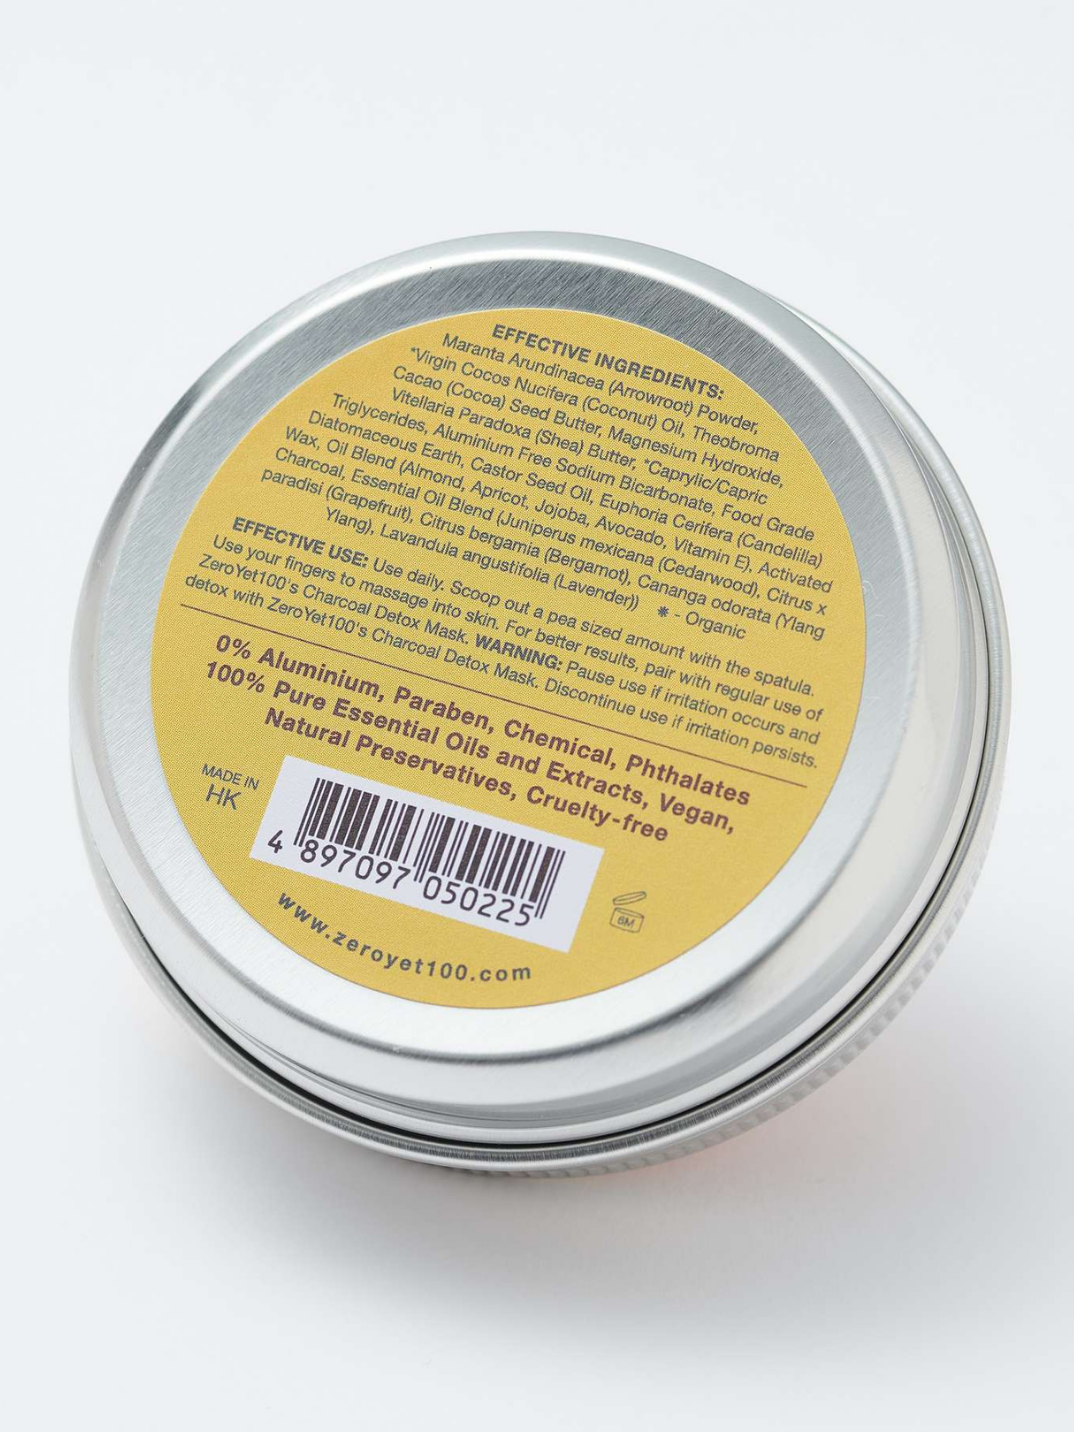 Z3 refresh deodorant pot Zero Yet 100 natural toxin-free skincare